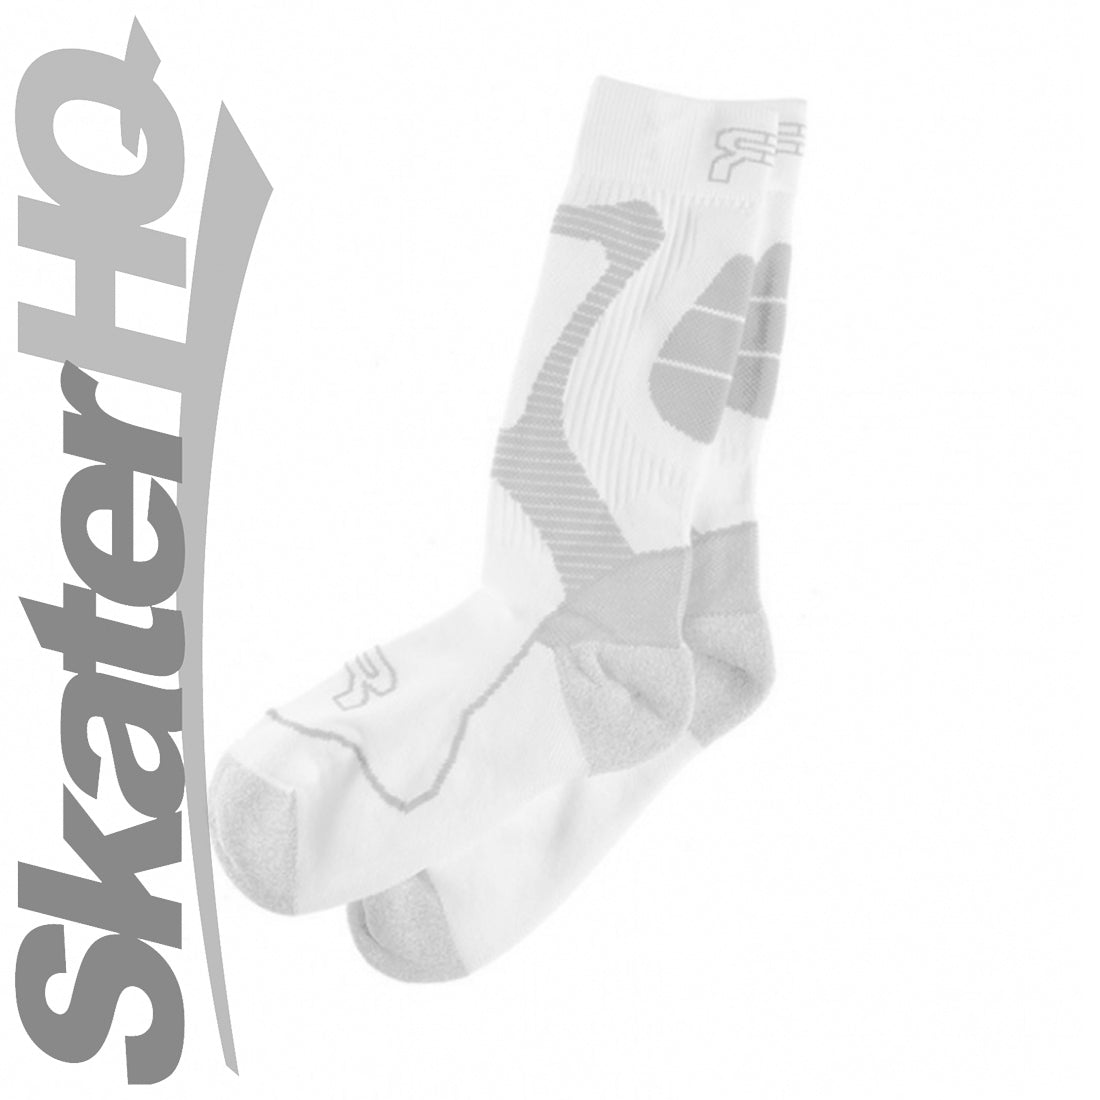 FR Nano Sport Socks White - Medium - EU39-41 Apparel Socks